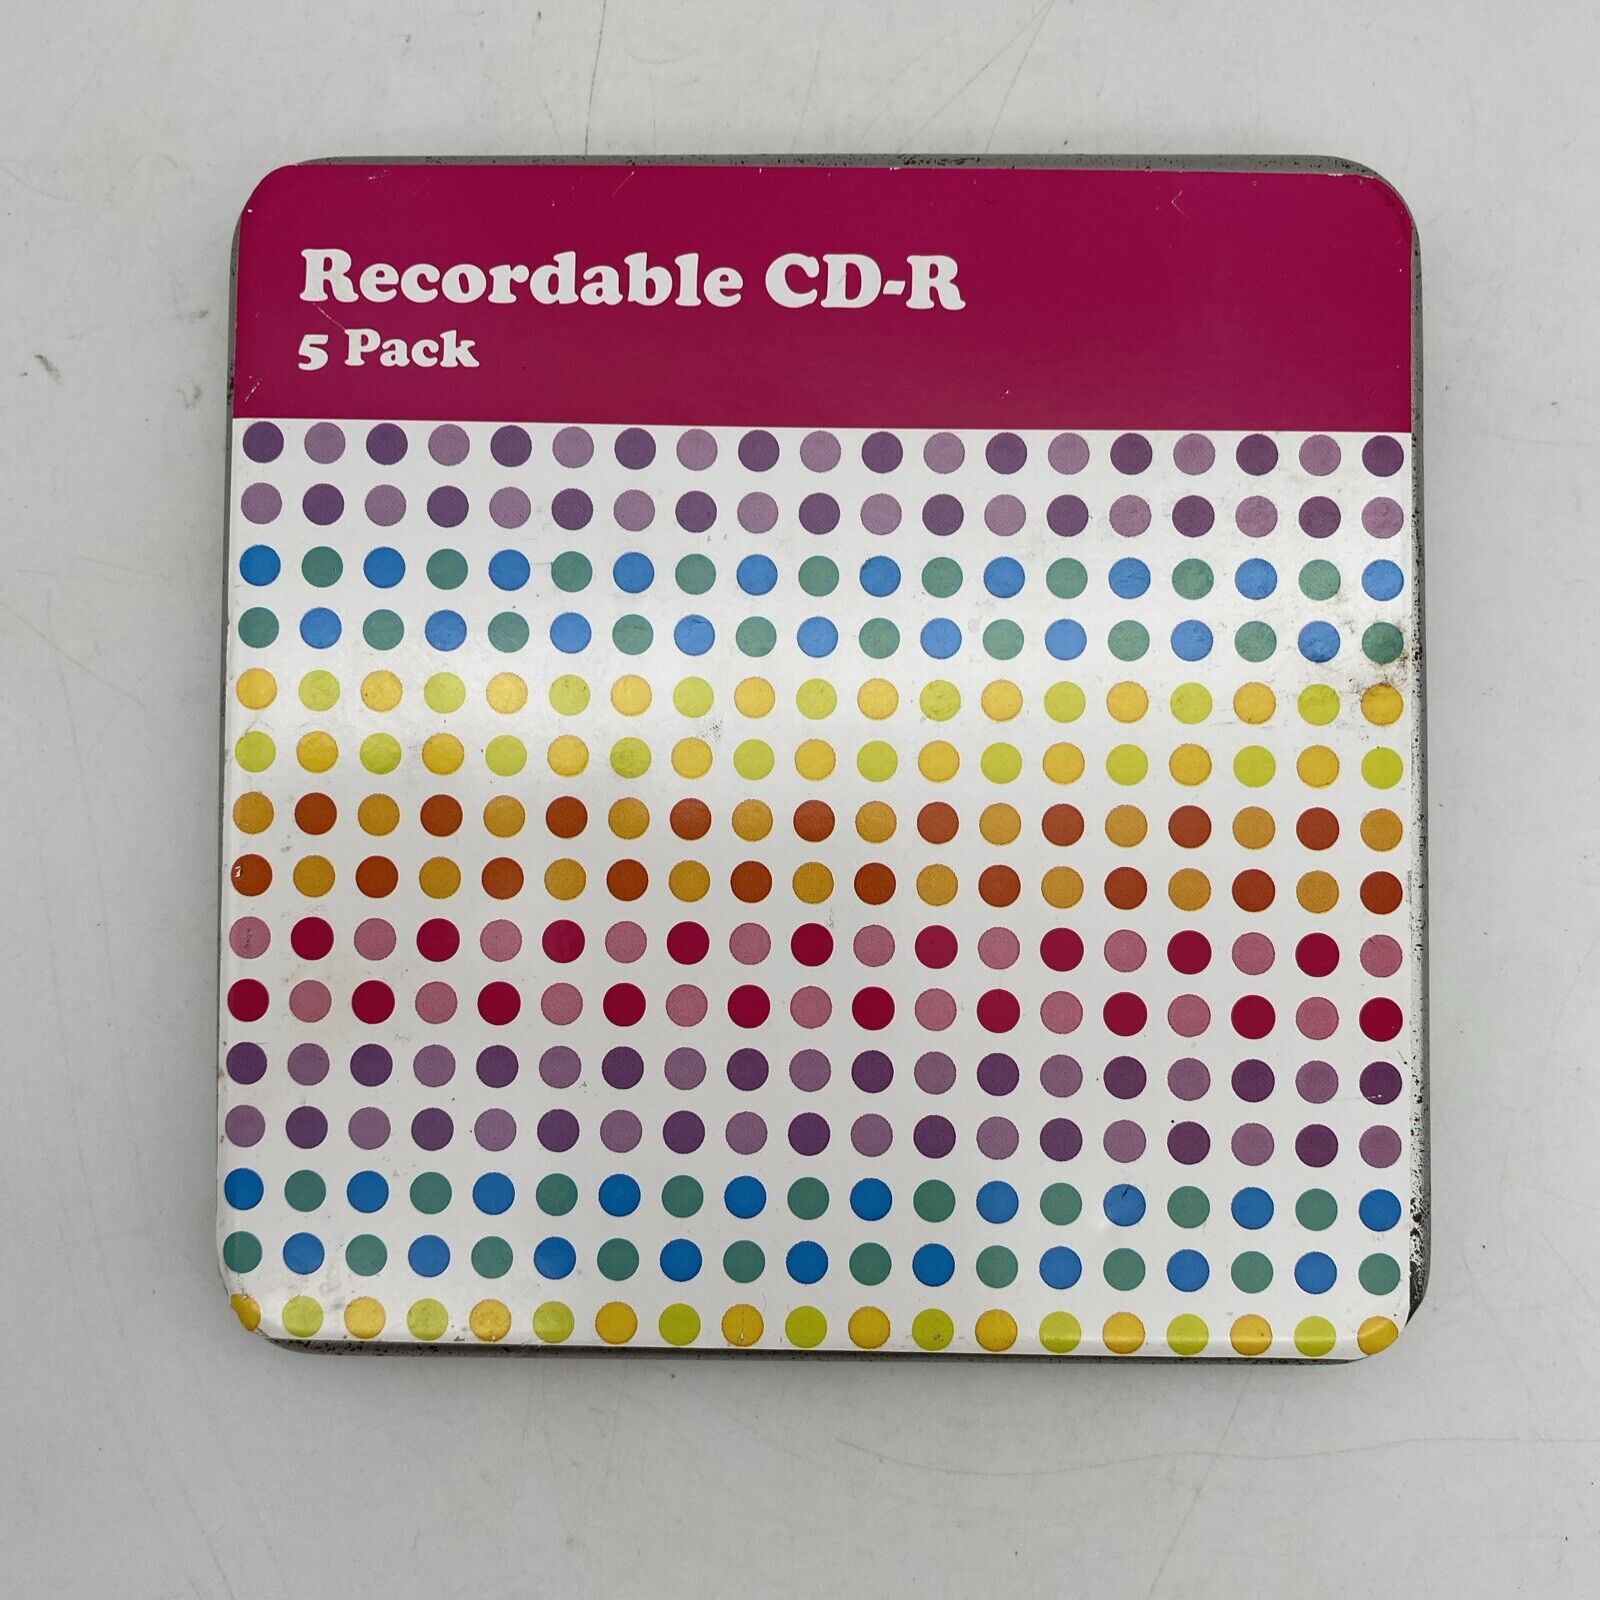 5 Pack CD-R Color Media Recordable Colorful w/ Tin Case Bonus* 1 Sony CD-RW